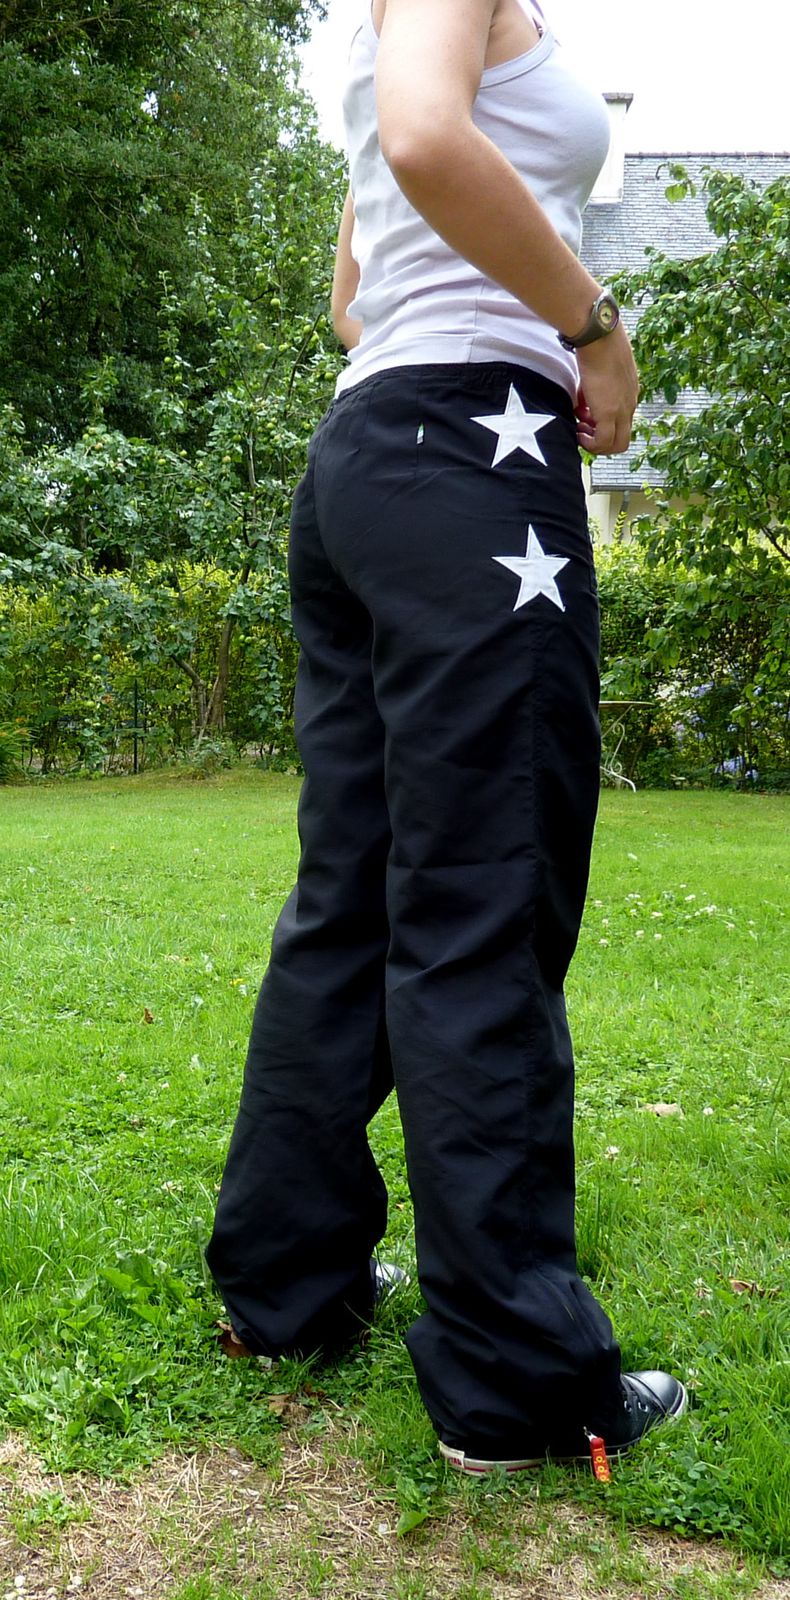 Pantalon Kanabeach étoiles - le dressing des girouettes!